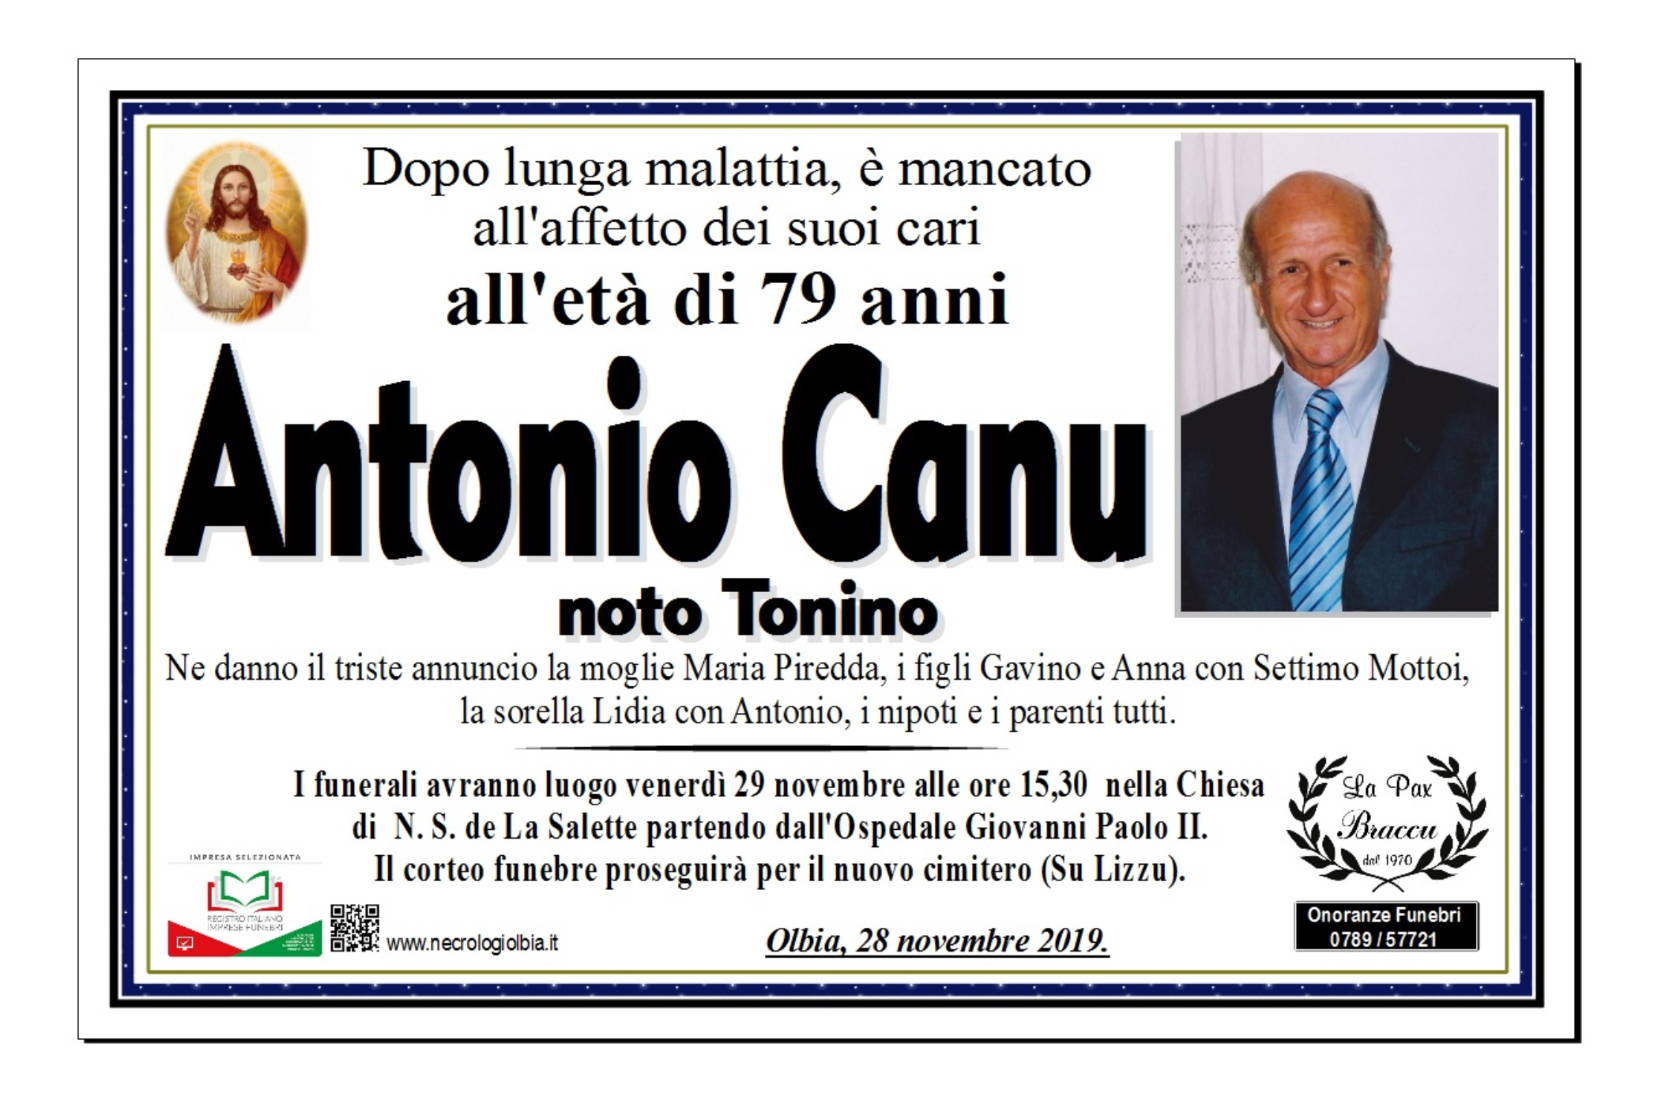 Antonio Canu